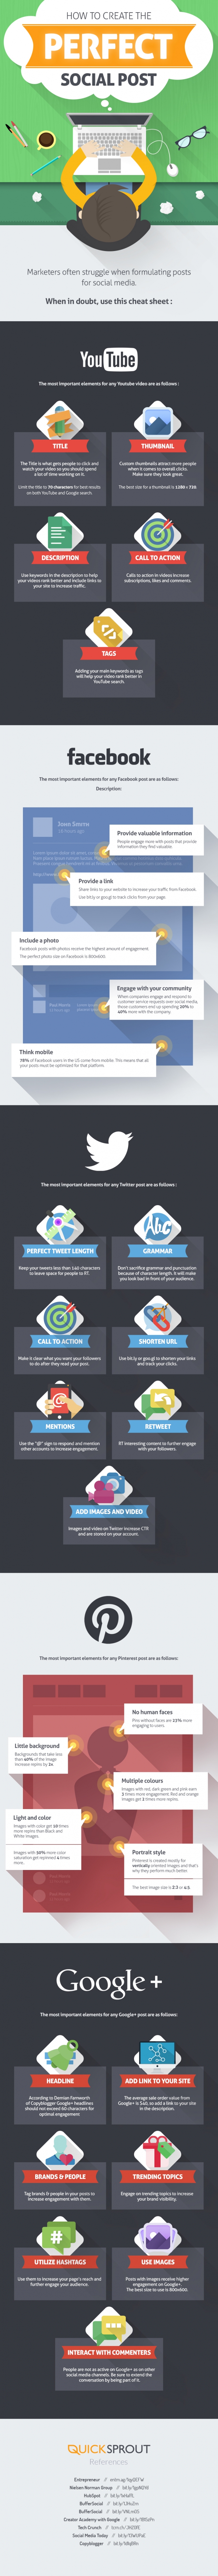 Social Media Posting – Tipps für den perfekten Post via Facebook & Co. [Infografik]